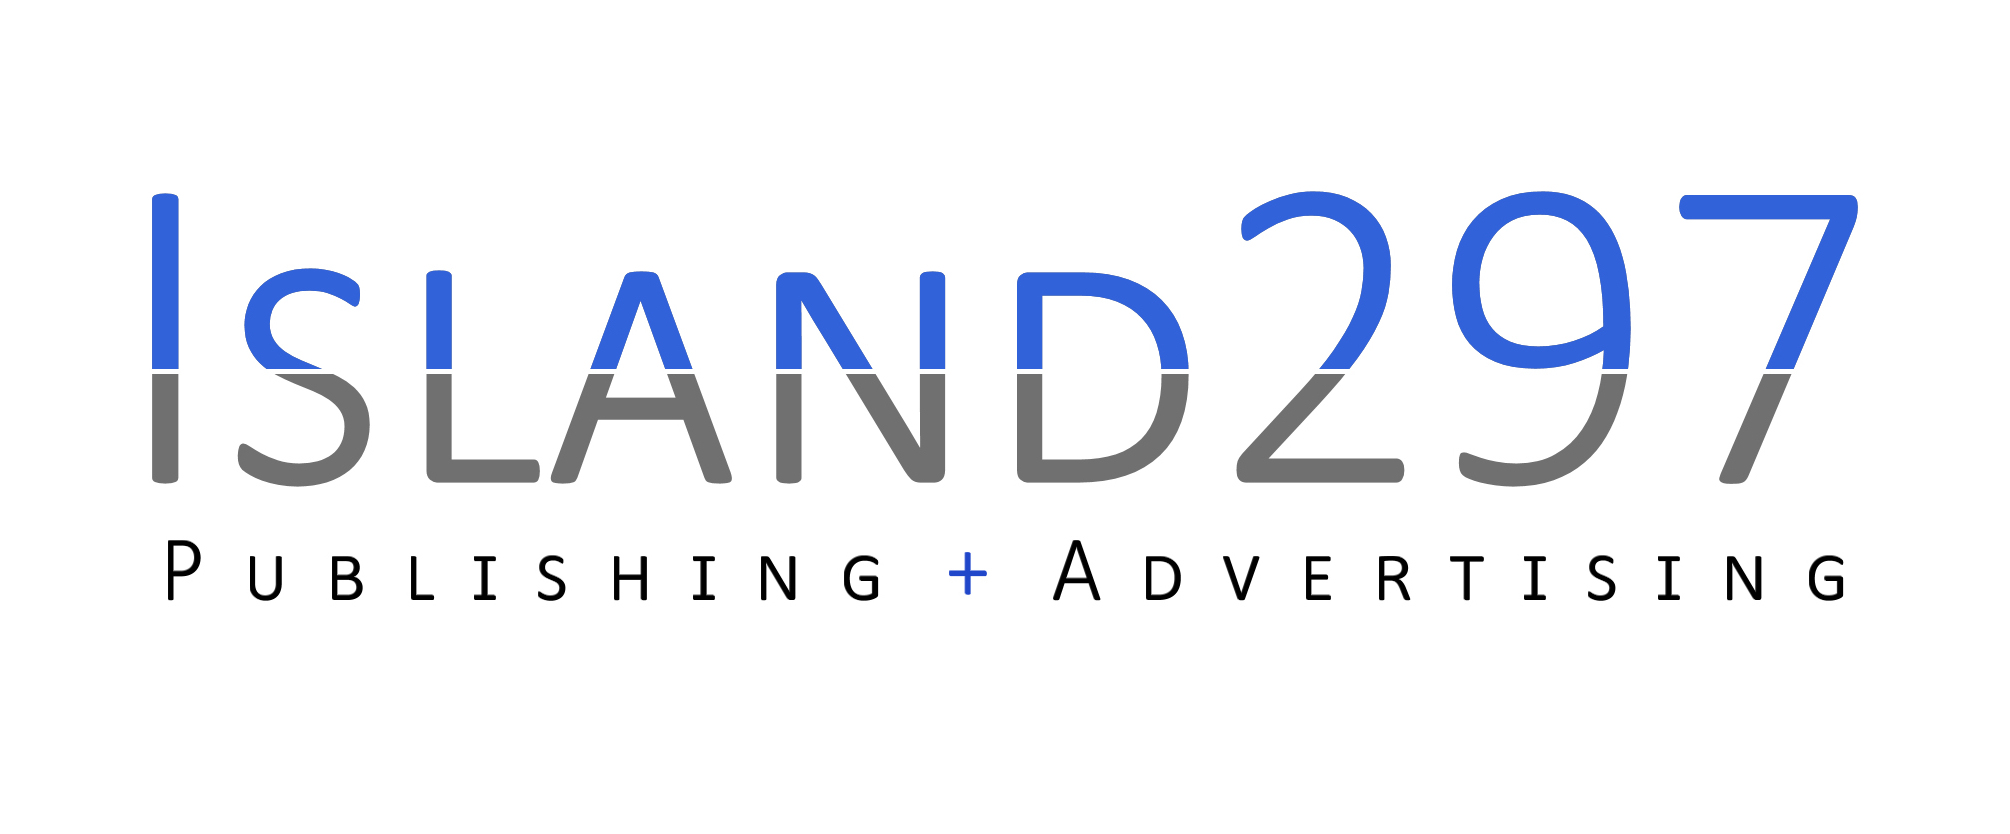 Island297 logo